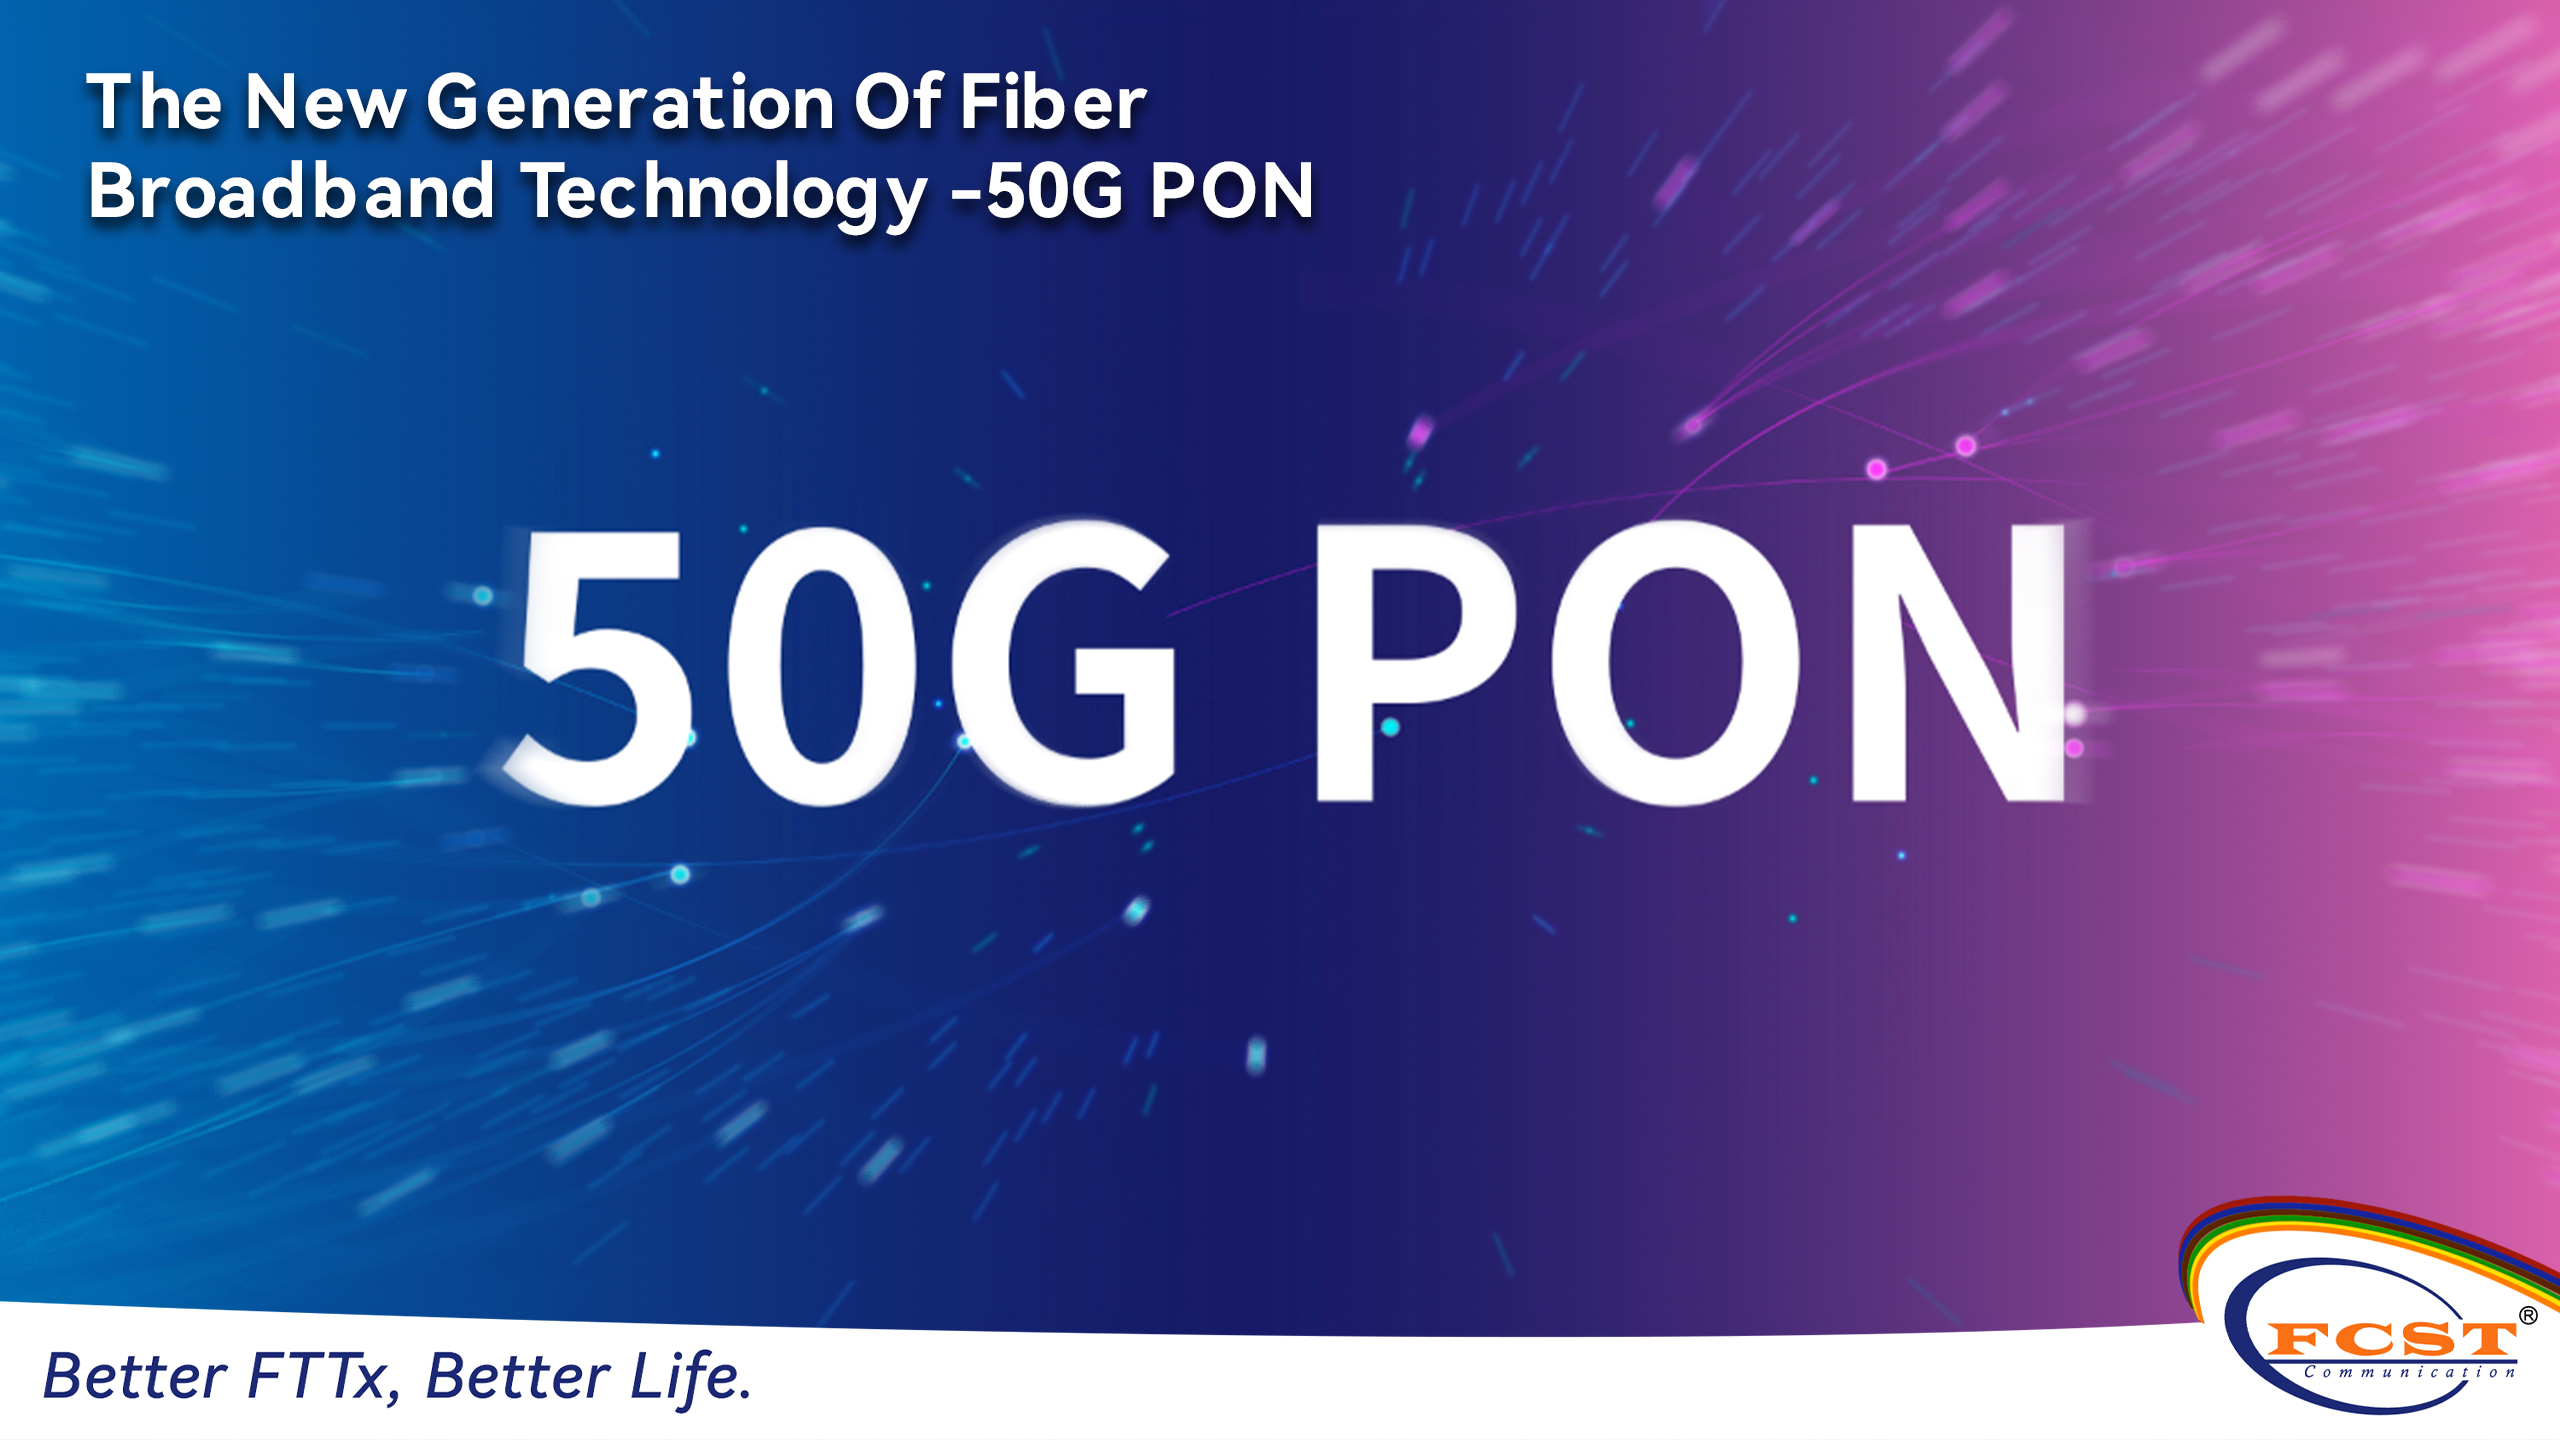 The New Generation Of Fiber Broadband Technology - 50G PON